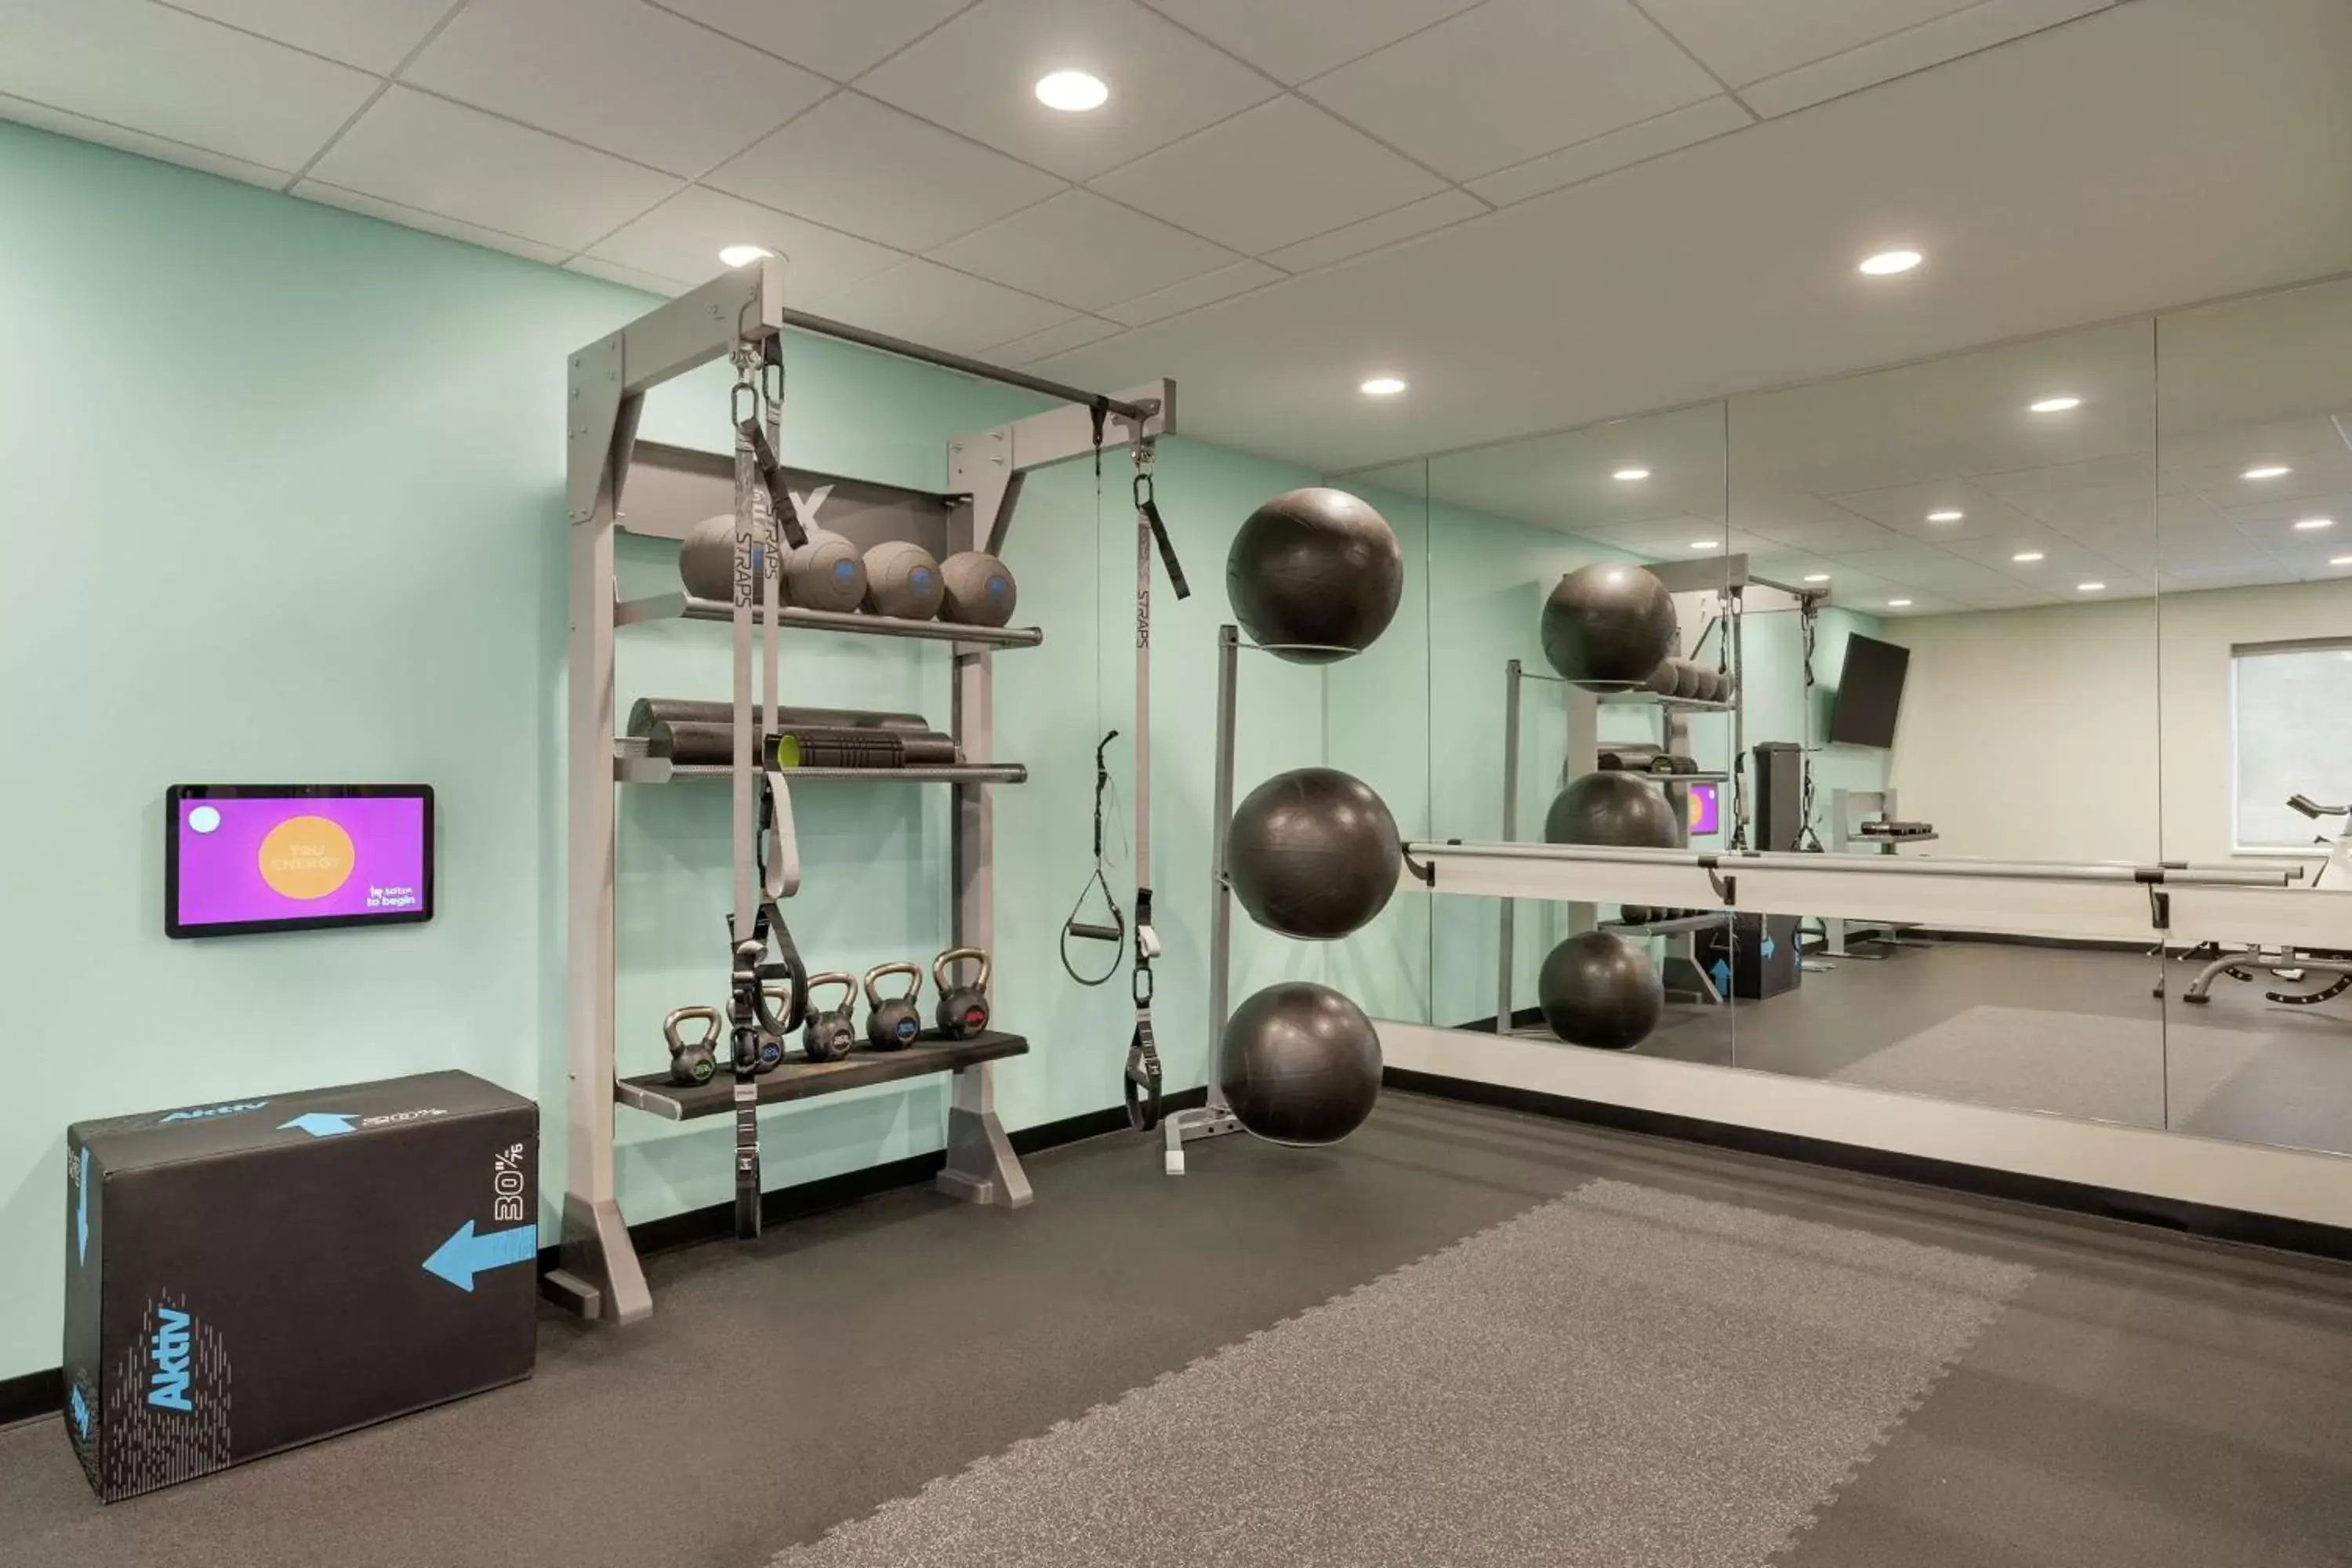 Fitness centre/facilities, Fitness Center/Facilities in Tru By Hilton Sandusky, Oh